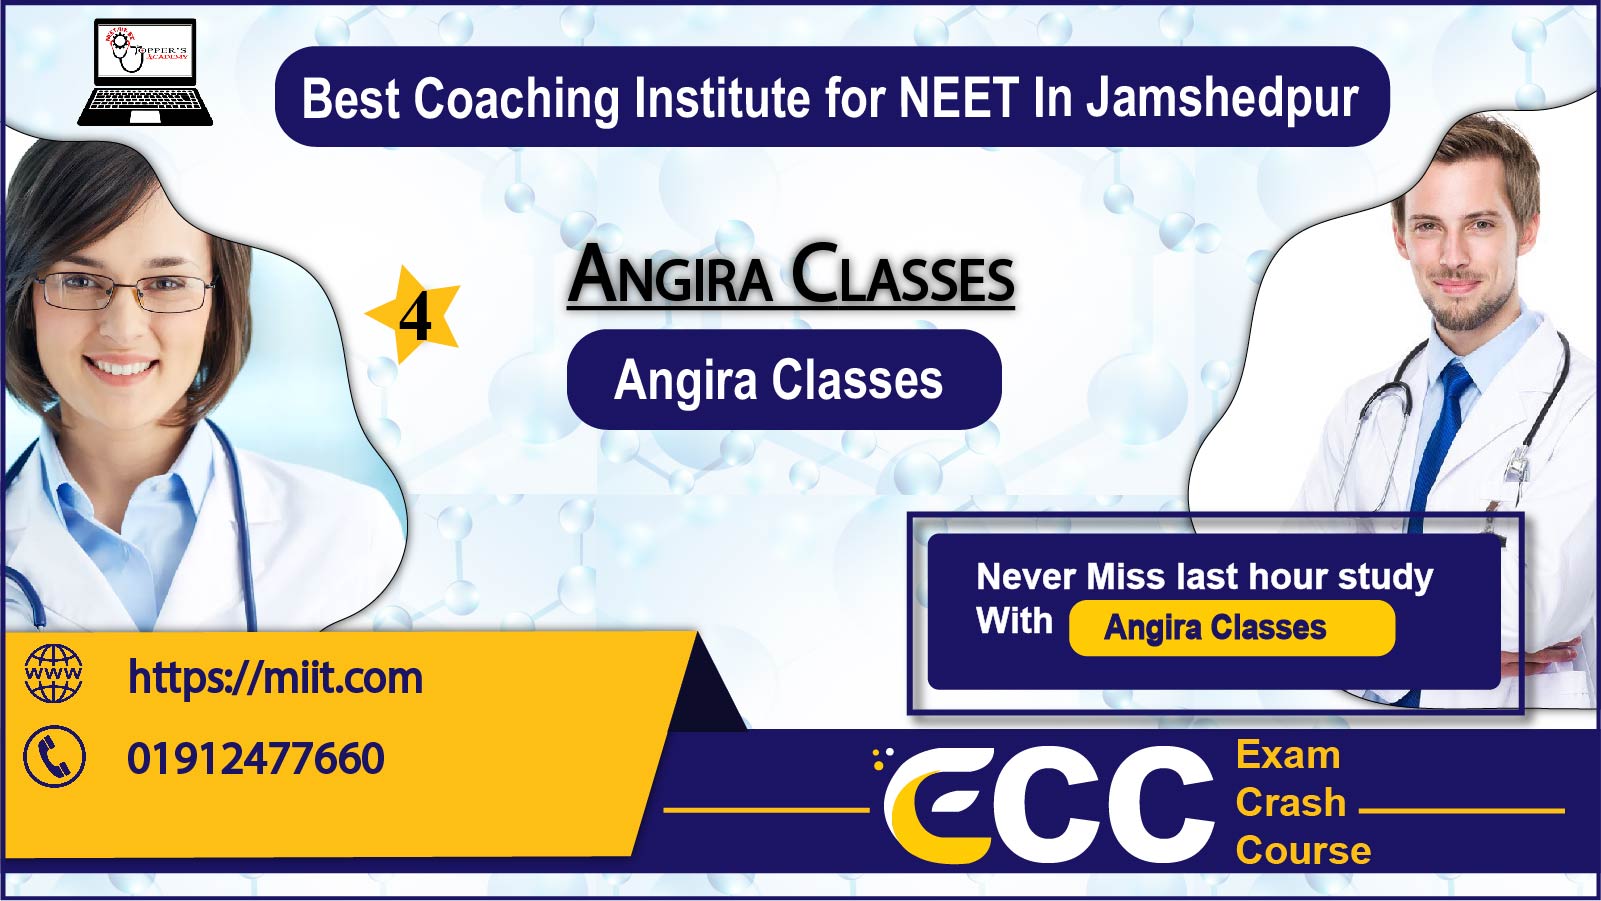 Angira Classes NEET Coaching in Jamshedpur